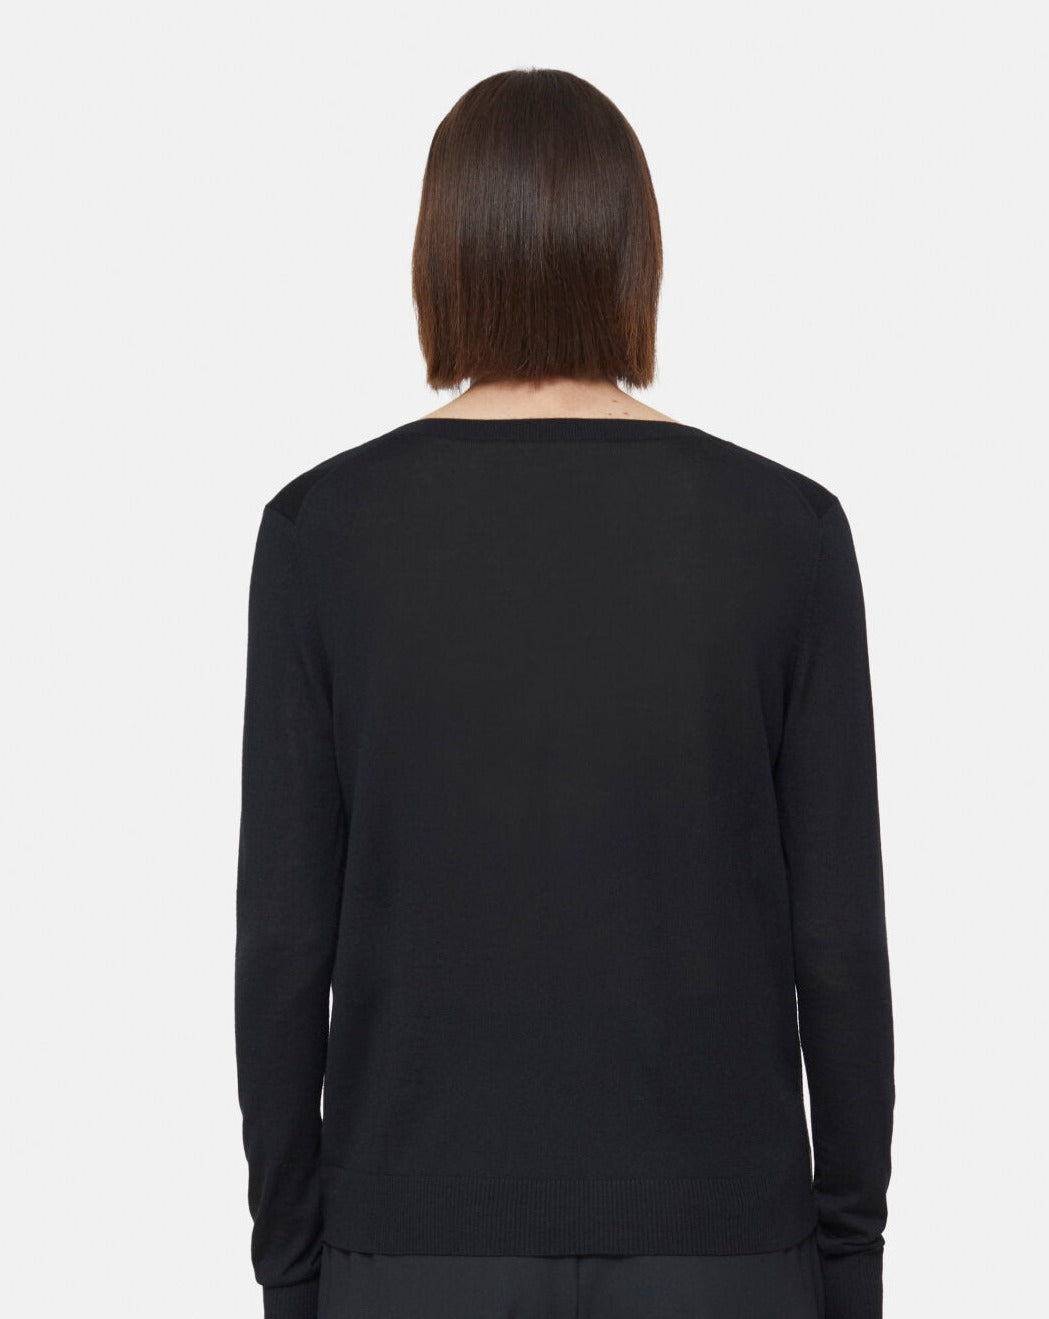 Closed Sweater Woman V-neck Long Sleeve Black